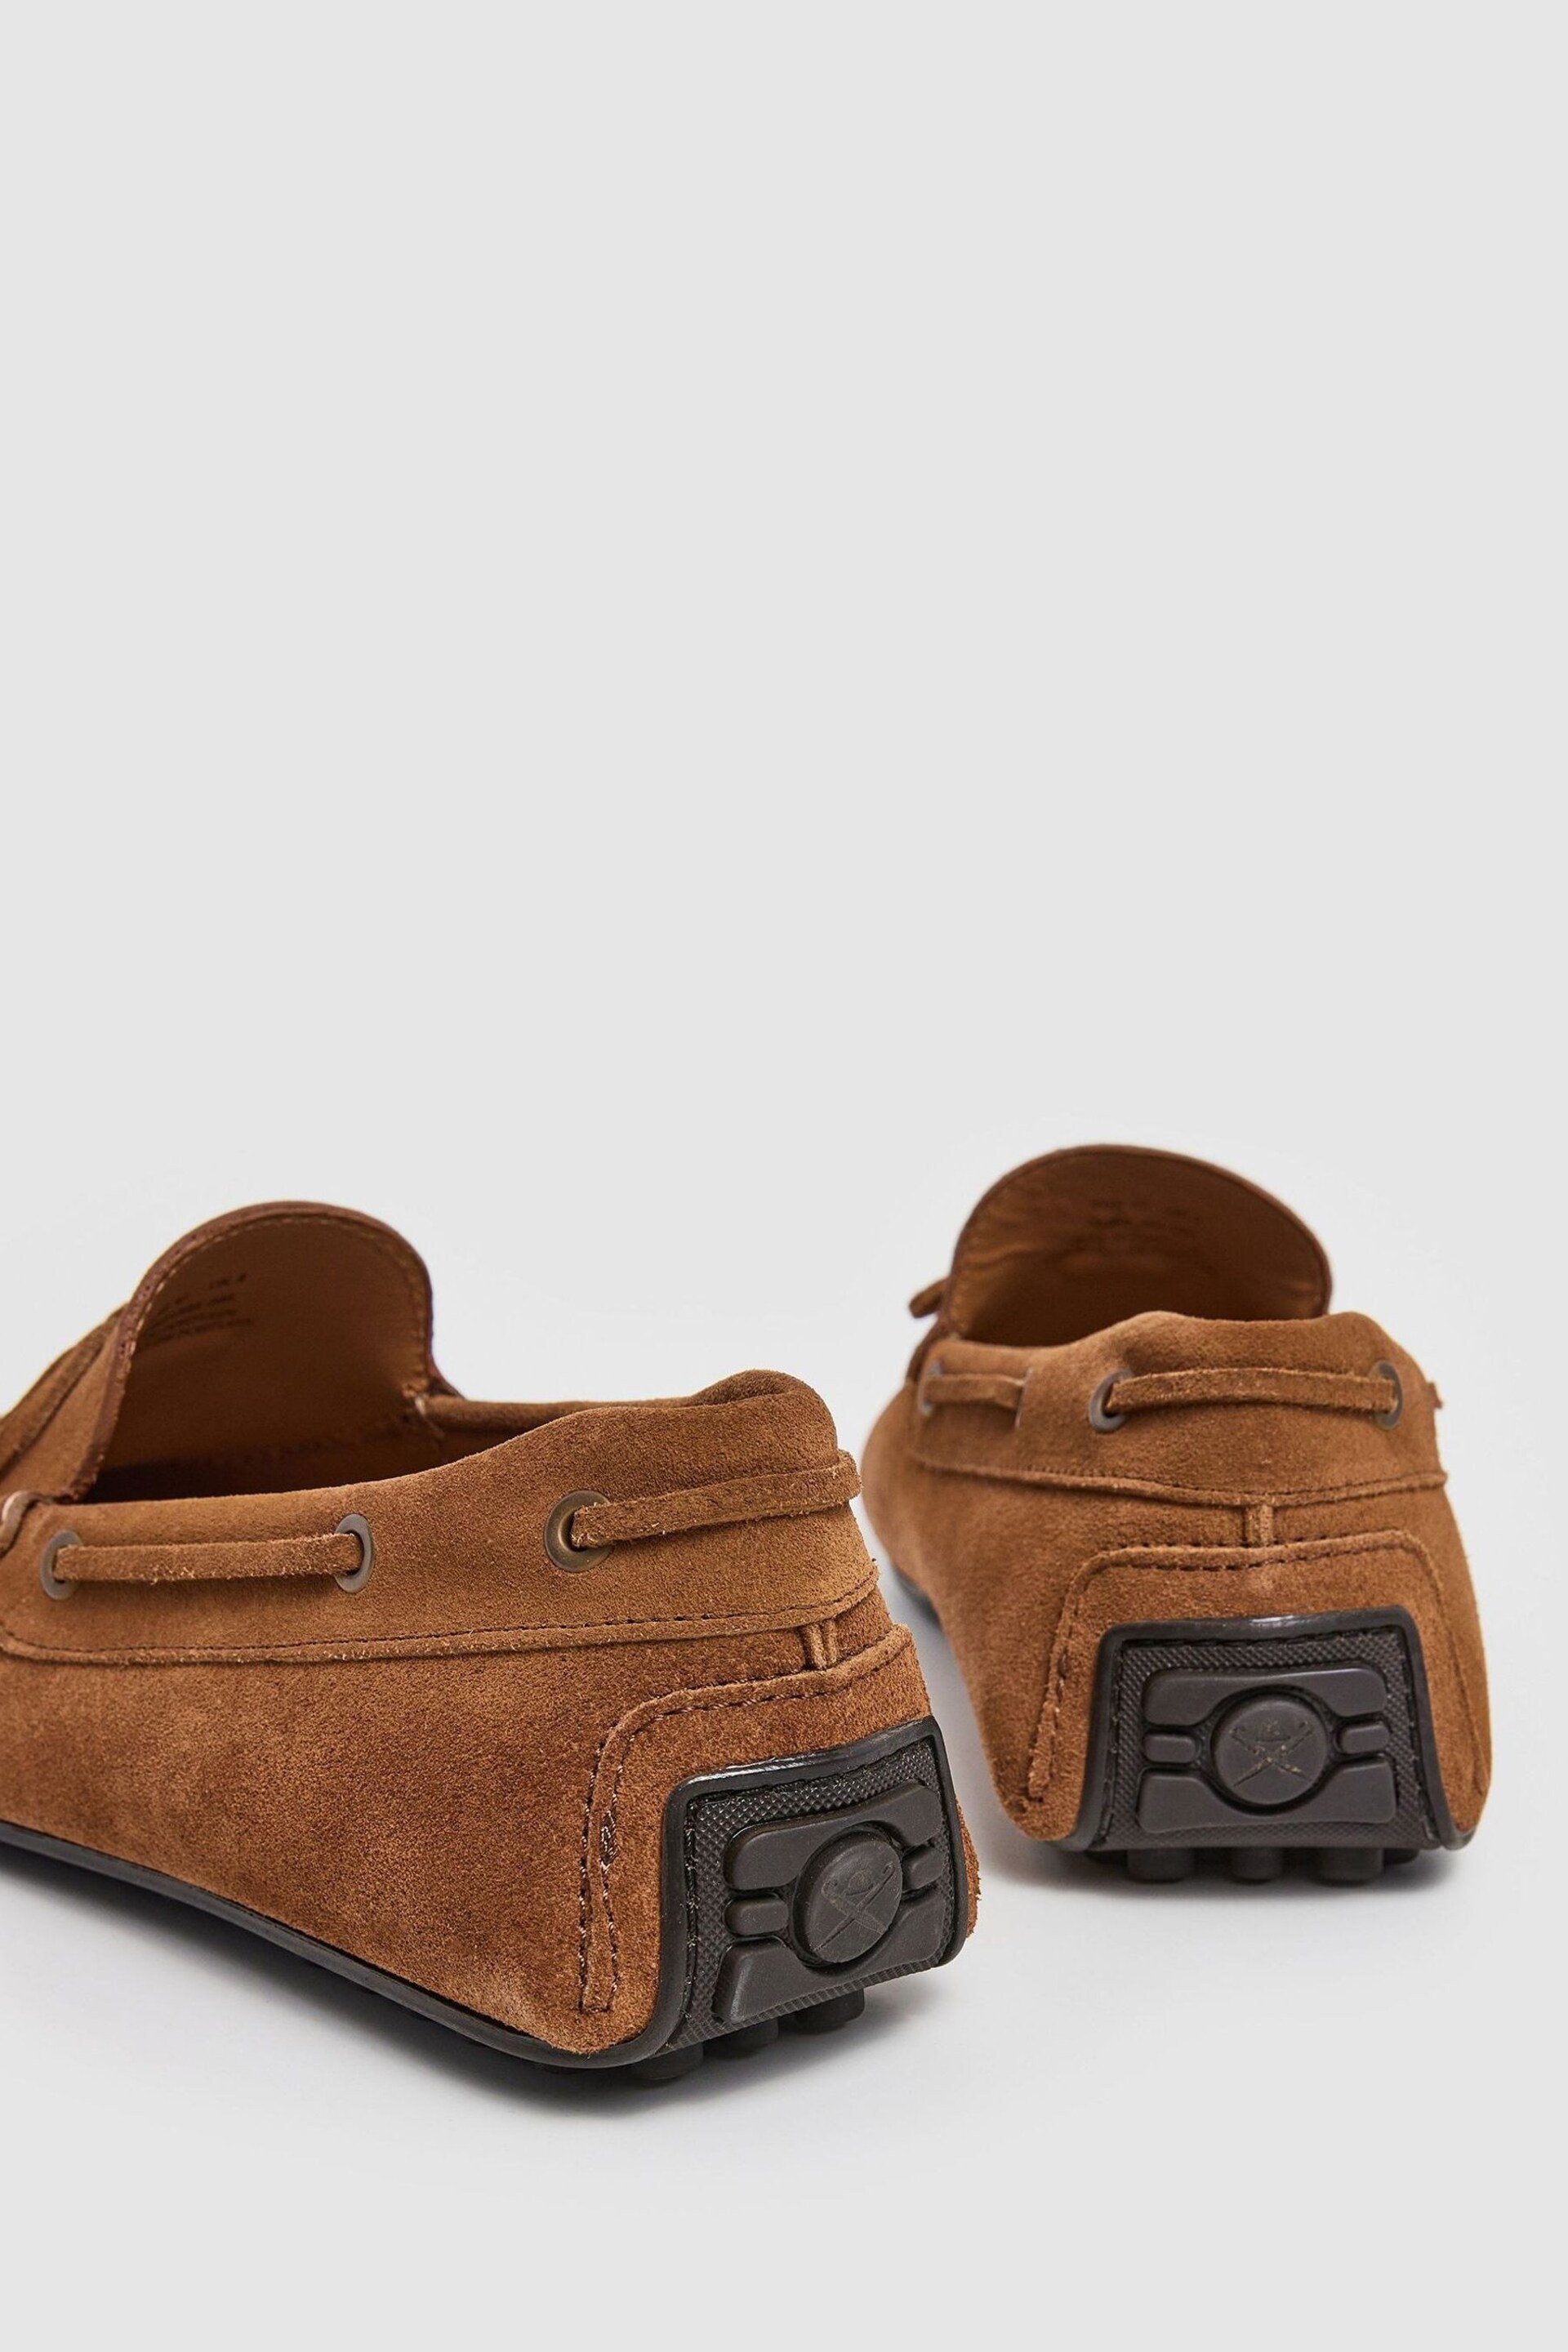 Hackett London Men Regular Brown Shoes - Image 5 of 6